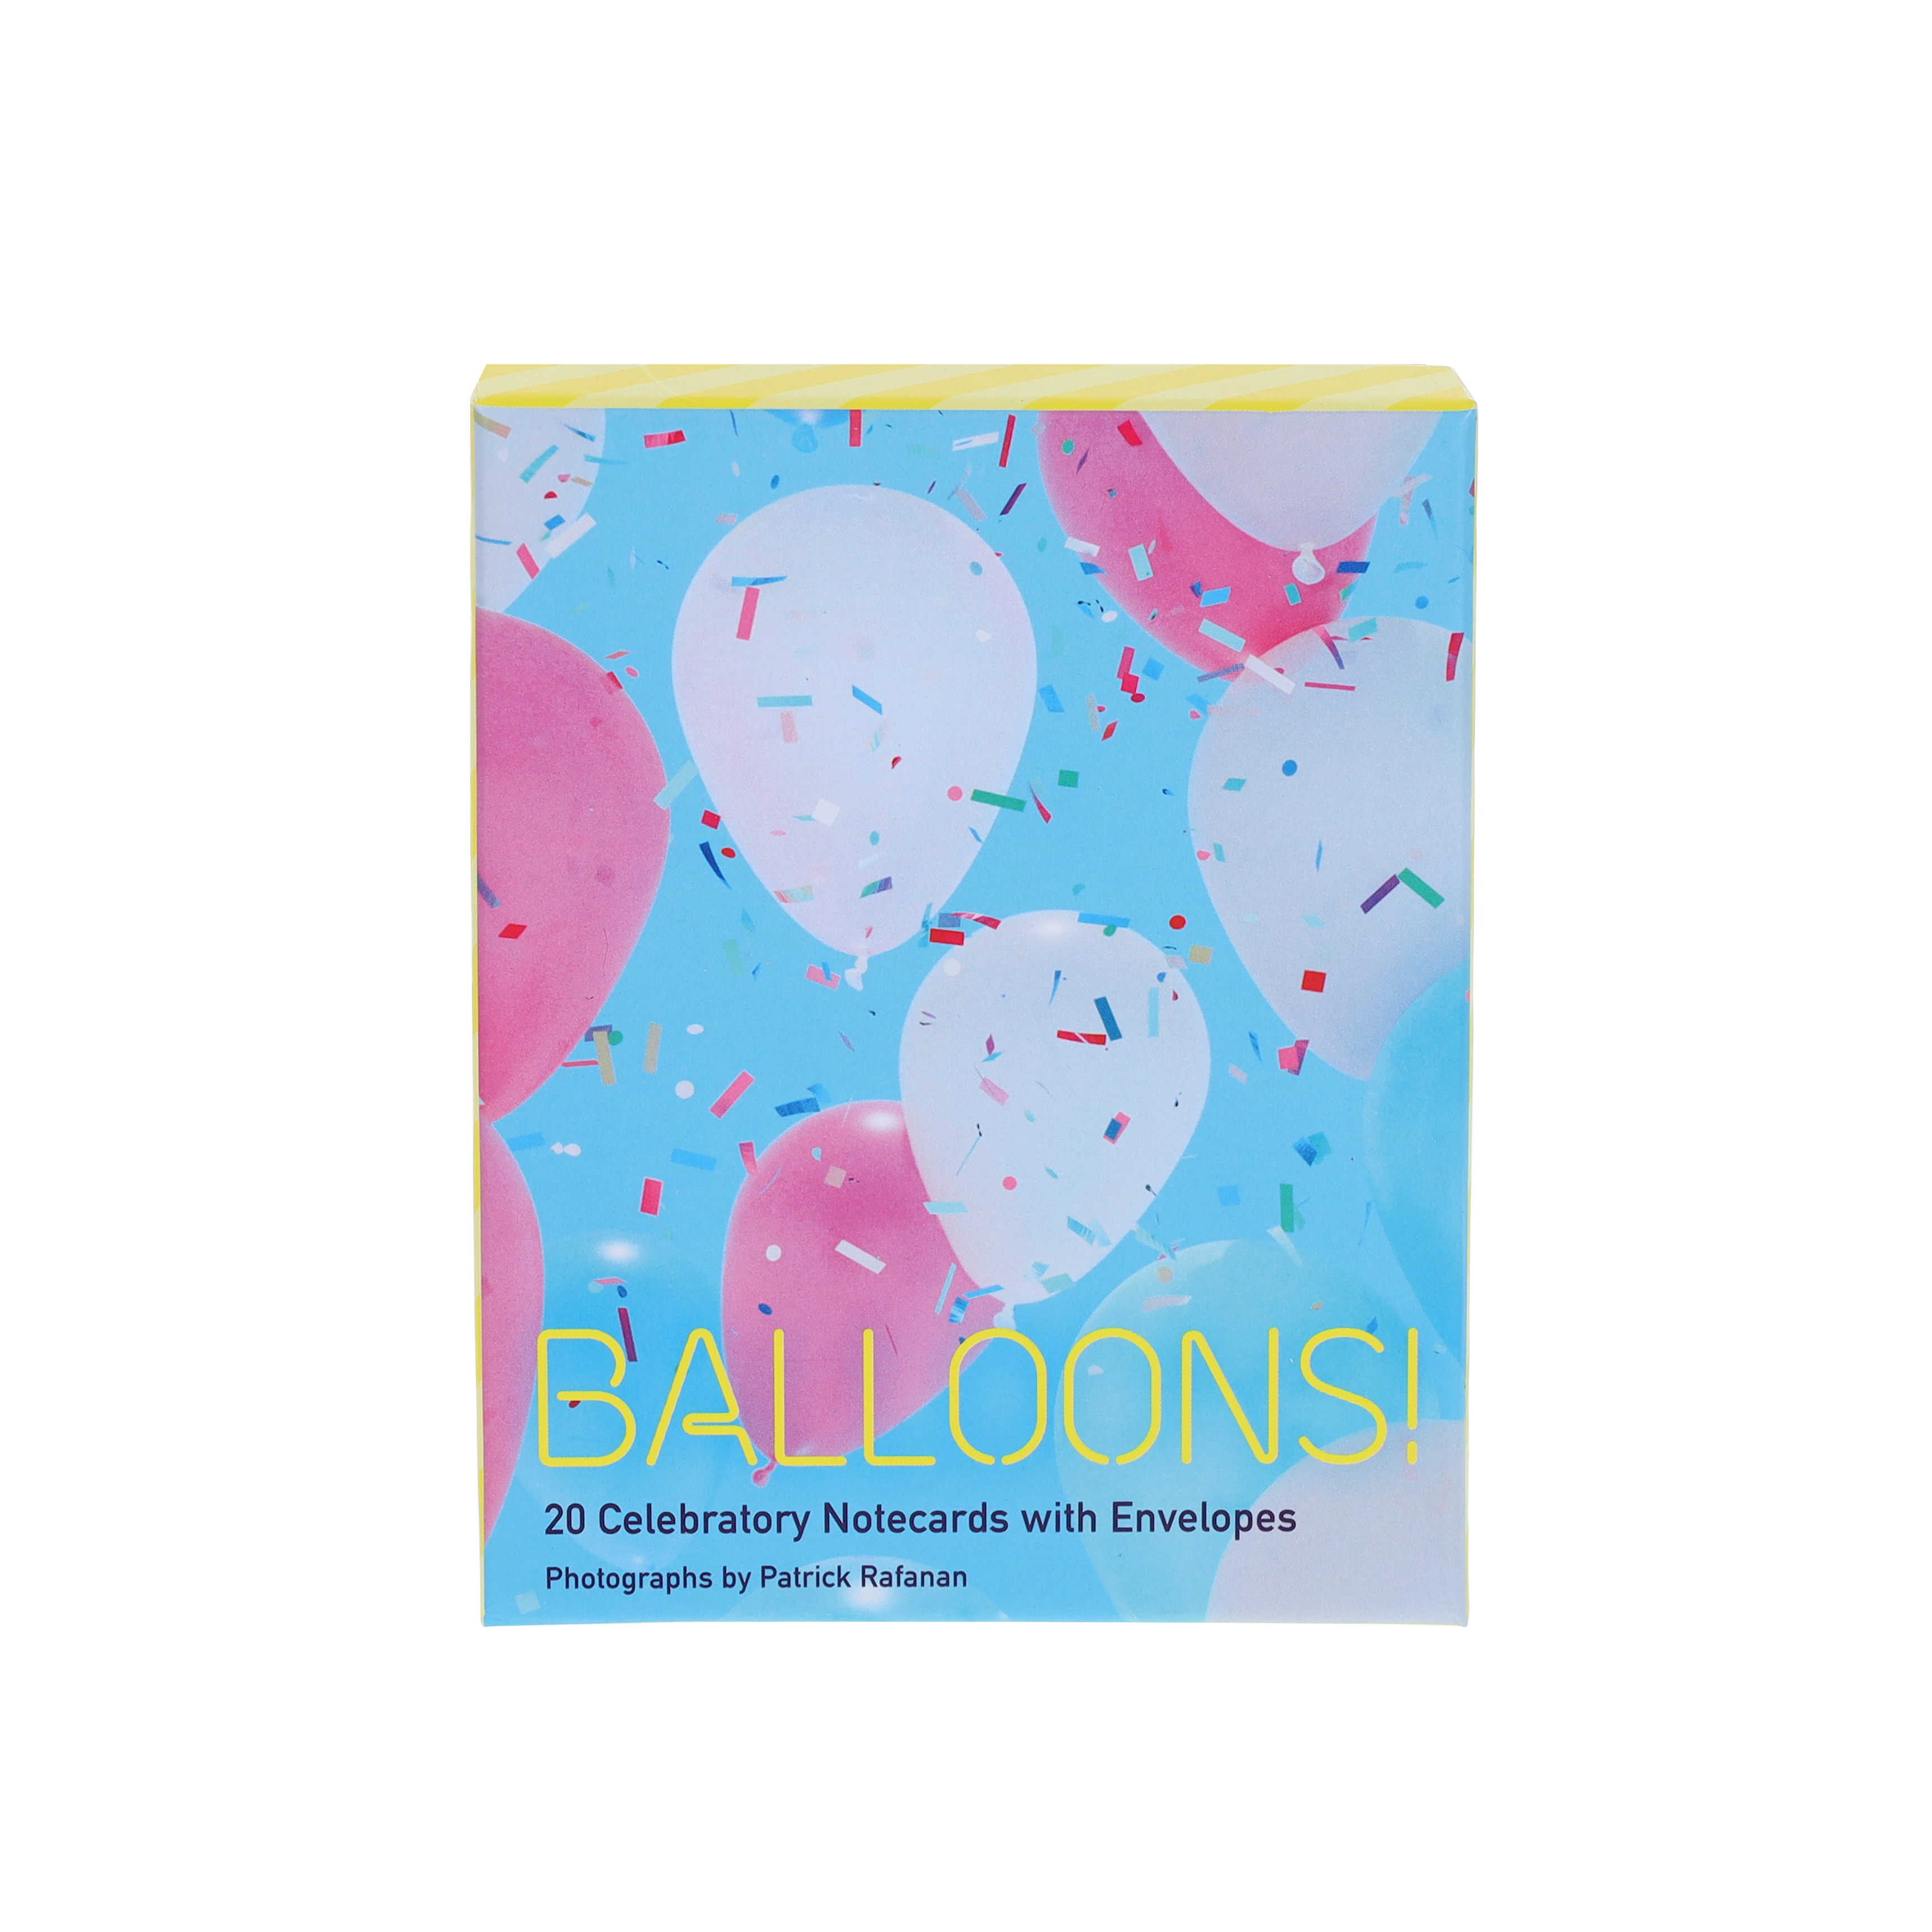 Balloons! Notes